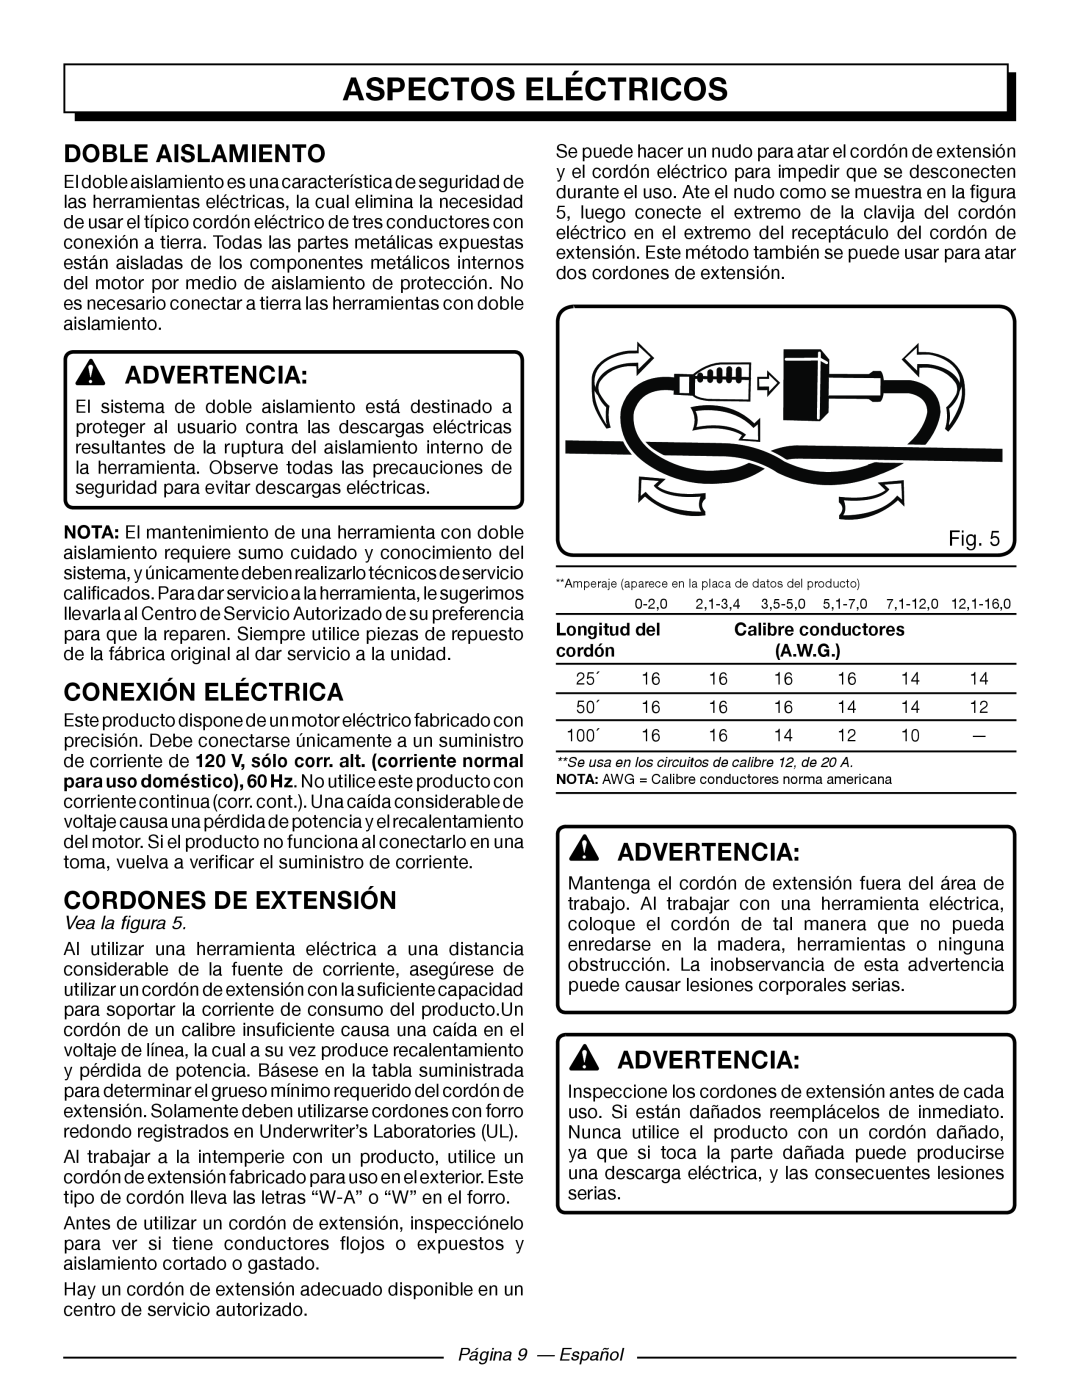 Homelite UT43102 Aspectosfeatureseléctricos, Doble Aislamiento, Conexión Eléctrica, Cordones De Extensión, Advertencia 